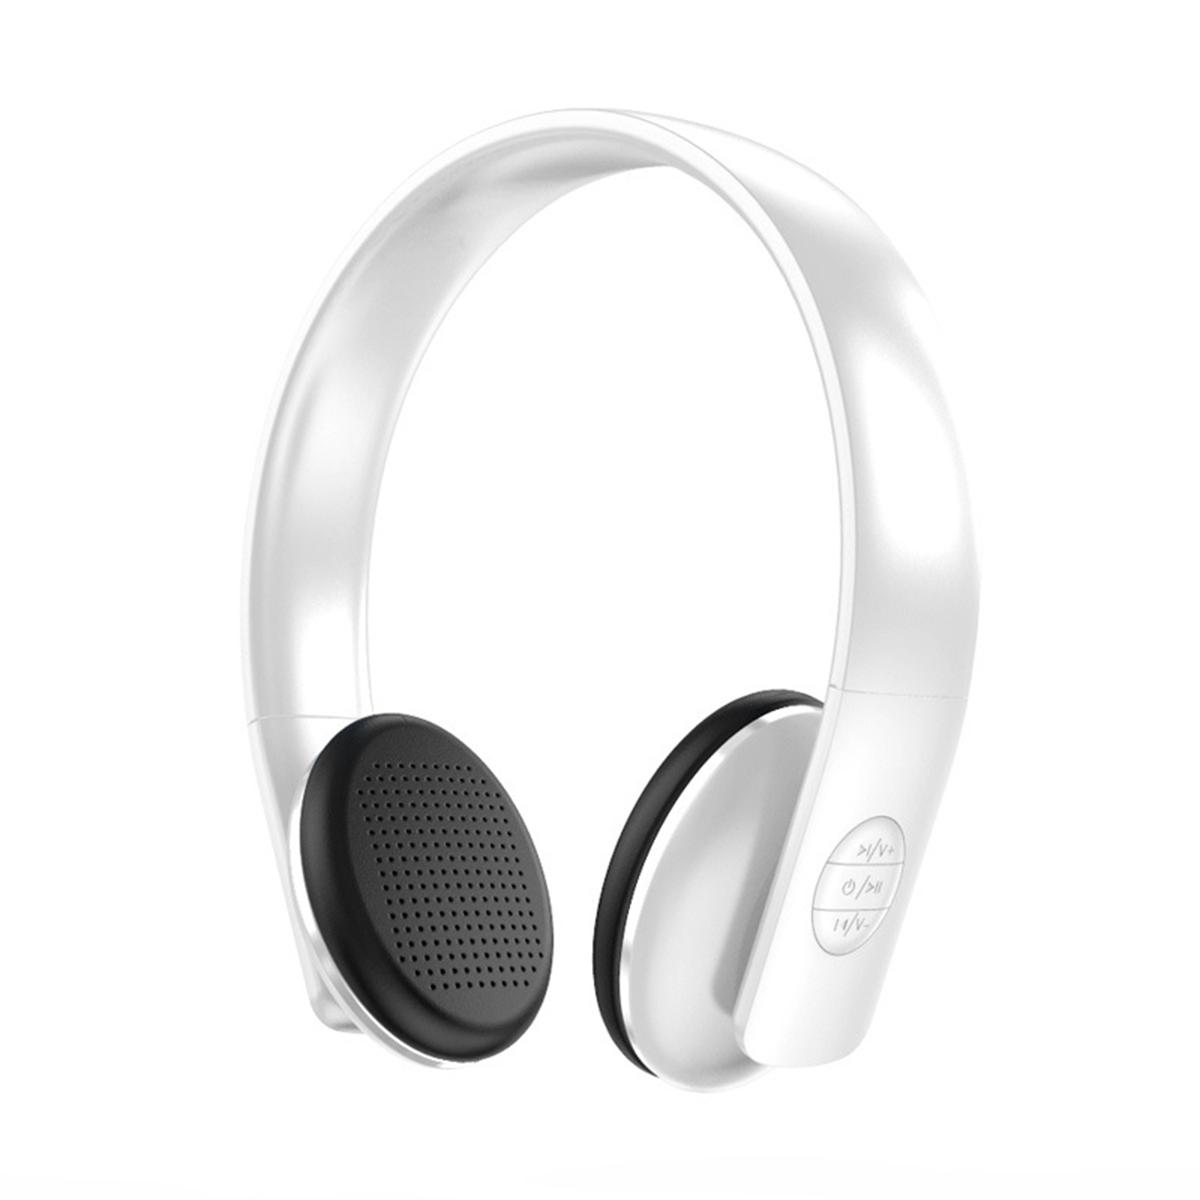 BRIGHTAKE Drahtloses Gaming-Headset: Bluetooth 5.0, Over-ear Kopfhörer Lange Weiß Klang, Hochwertiger & Akkulaufzeit